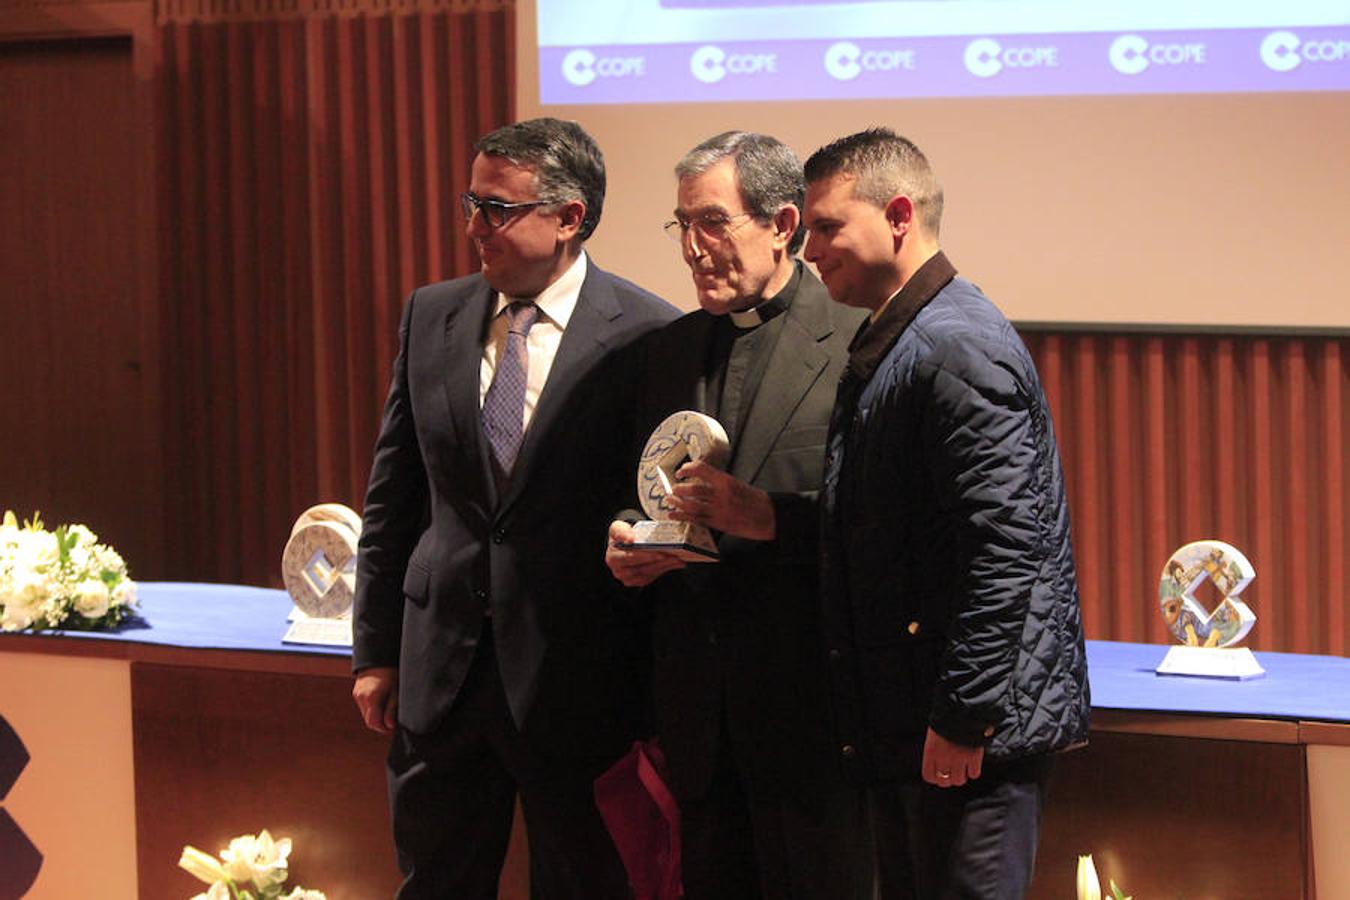 VIII Premios Cope Castilla-La Mancha